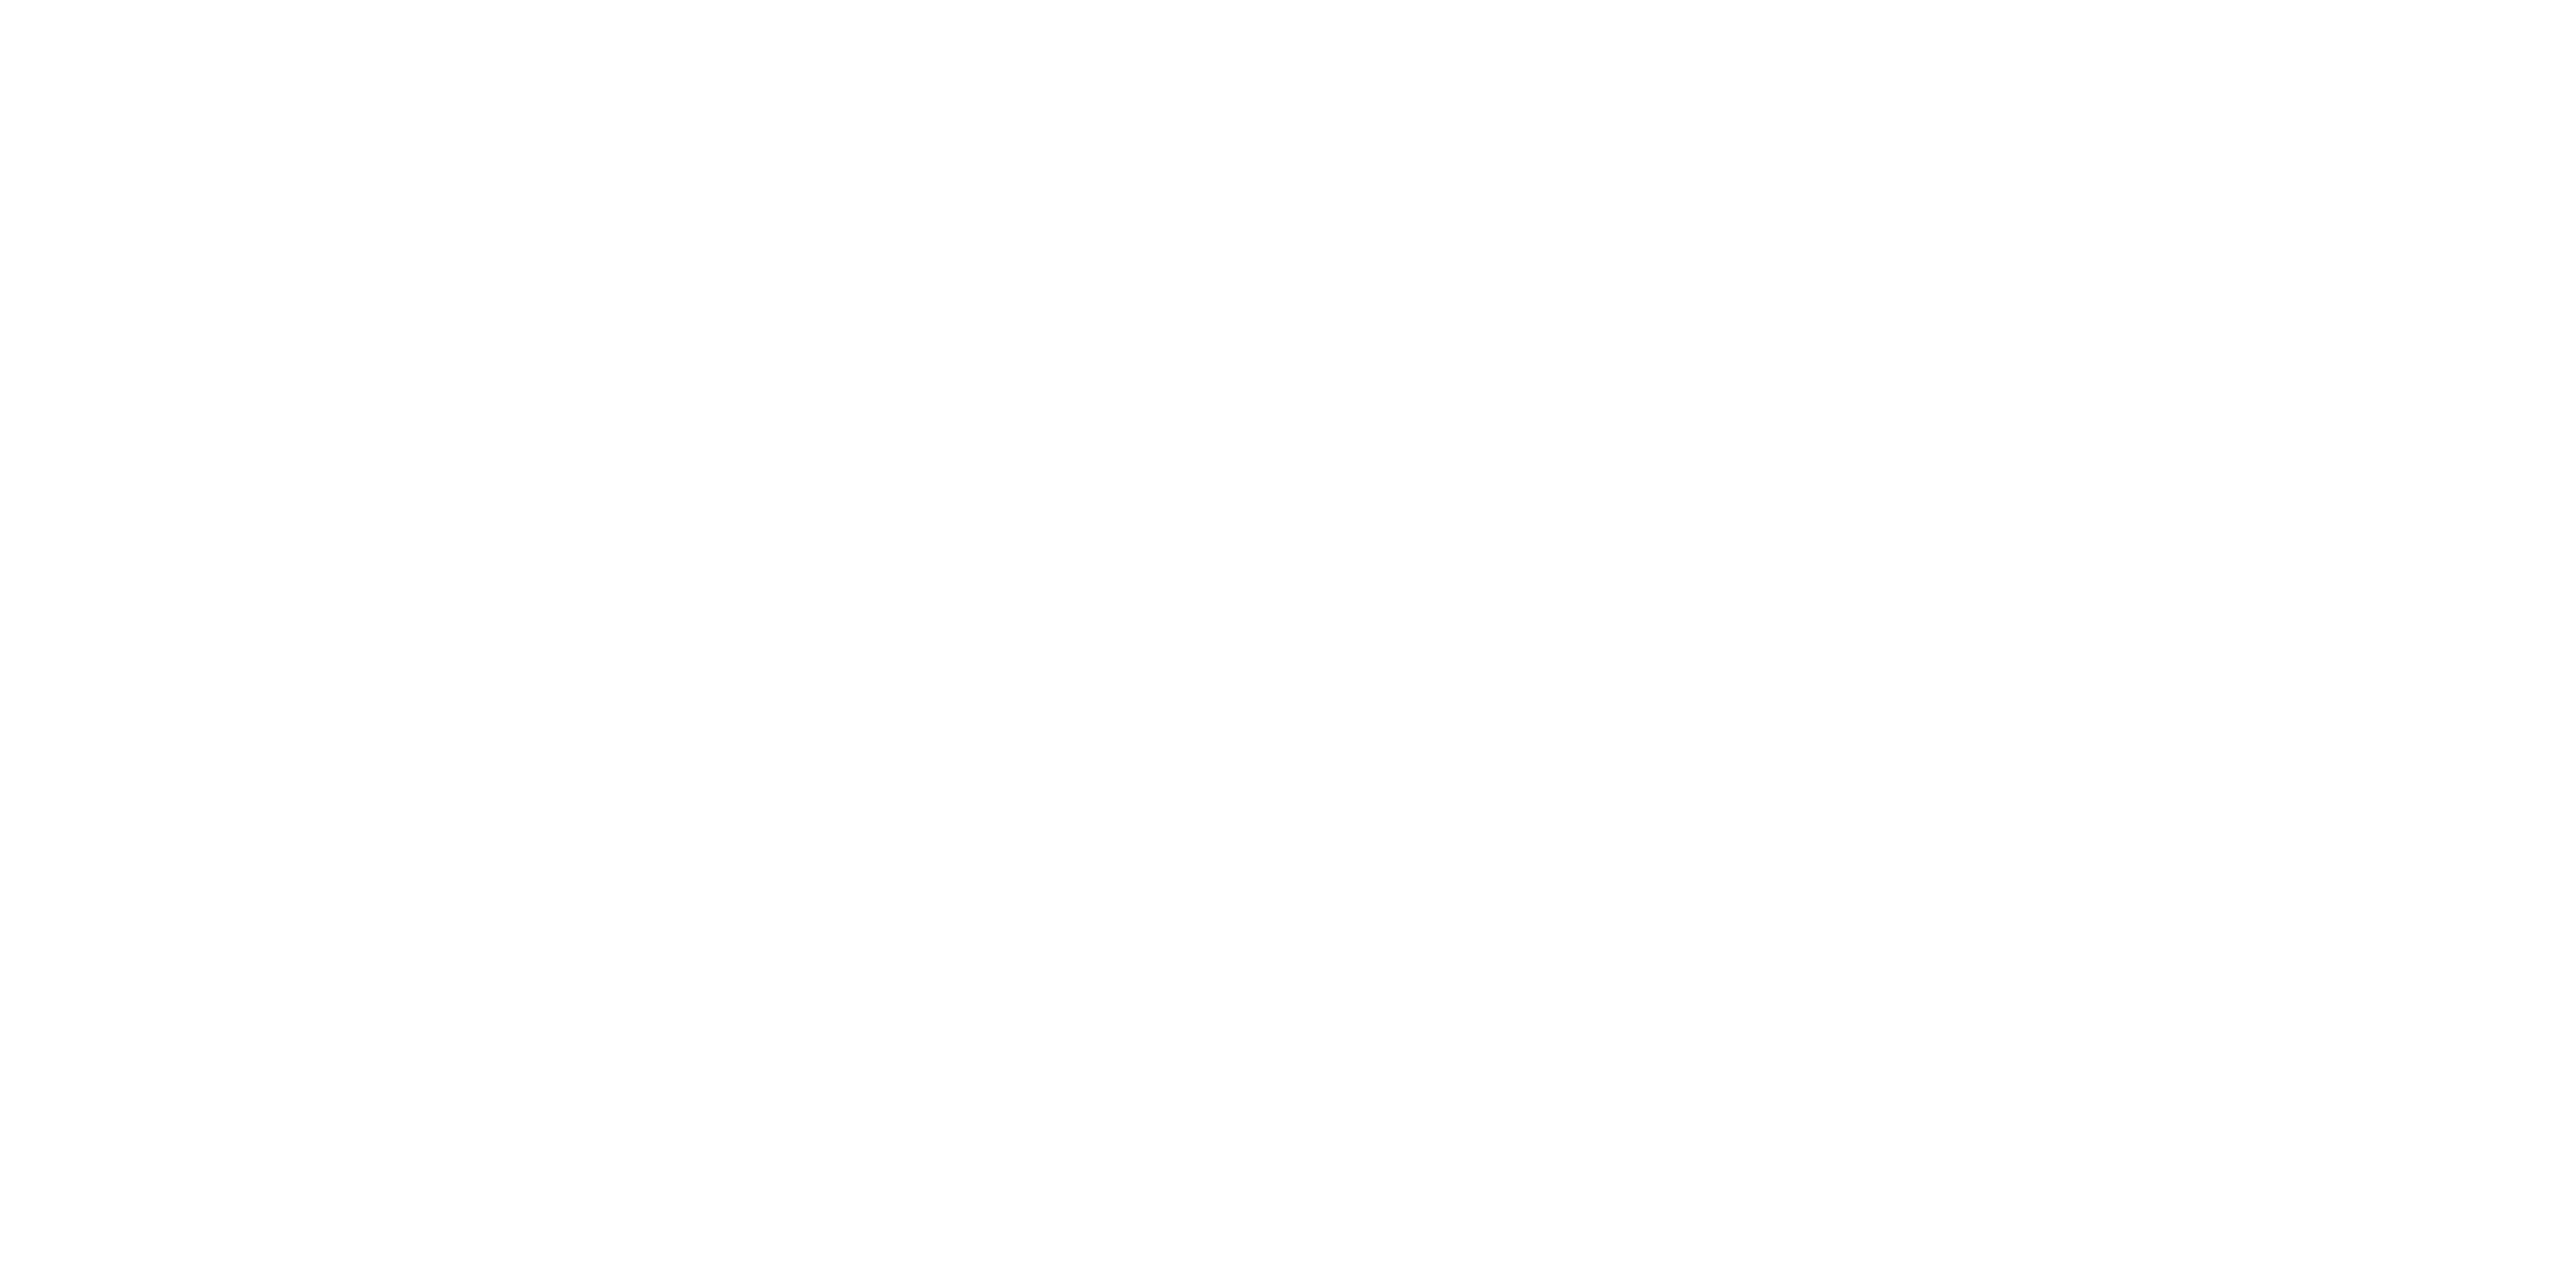 HARRY HYMAN OF NEXUS GROUP